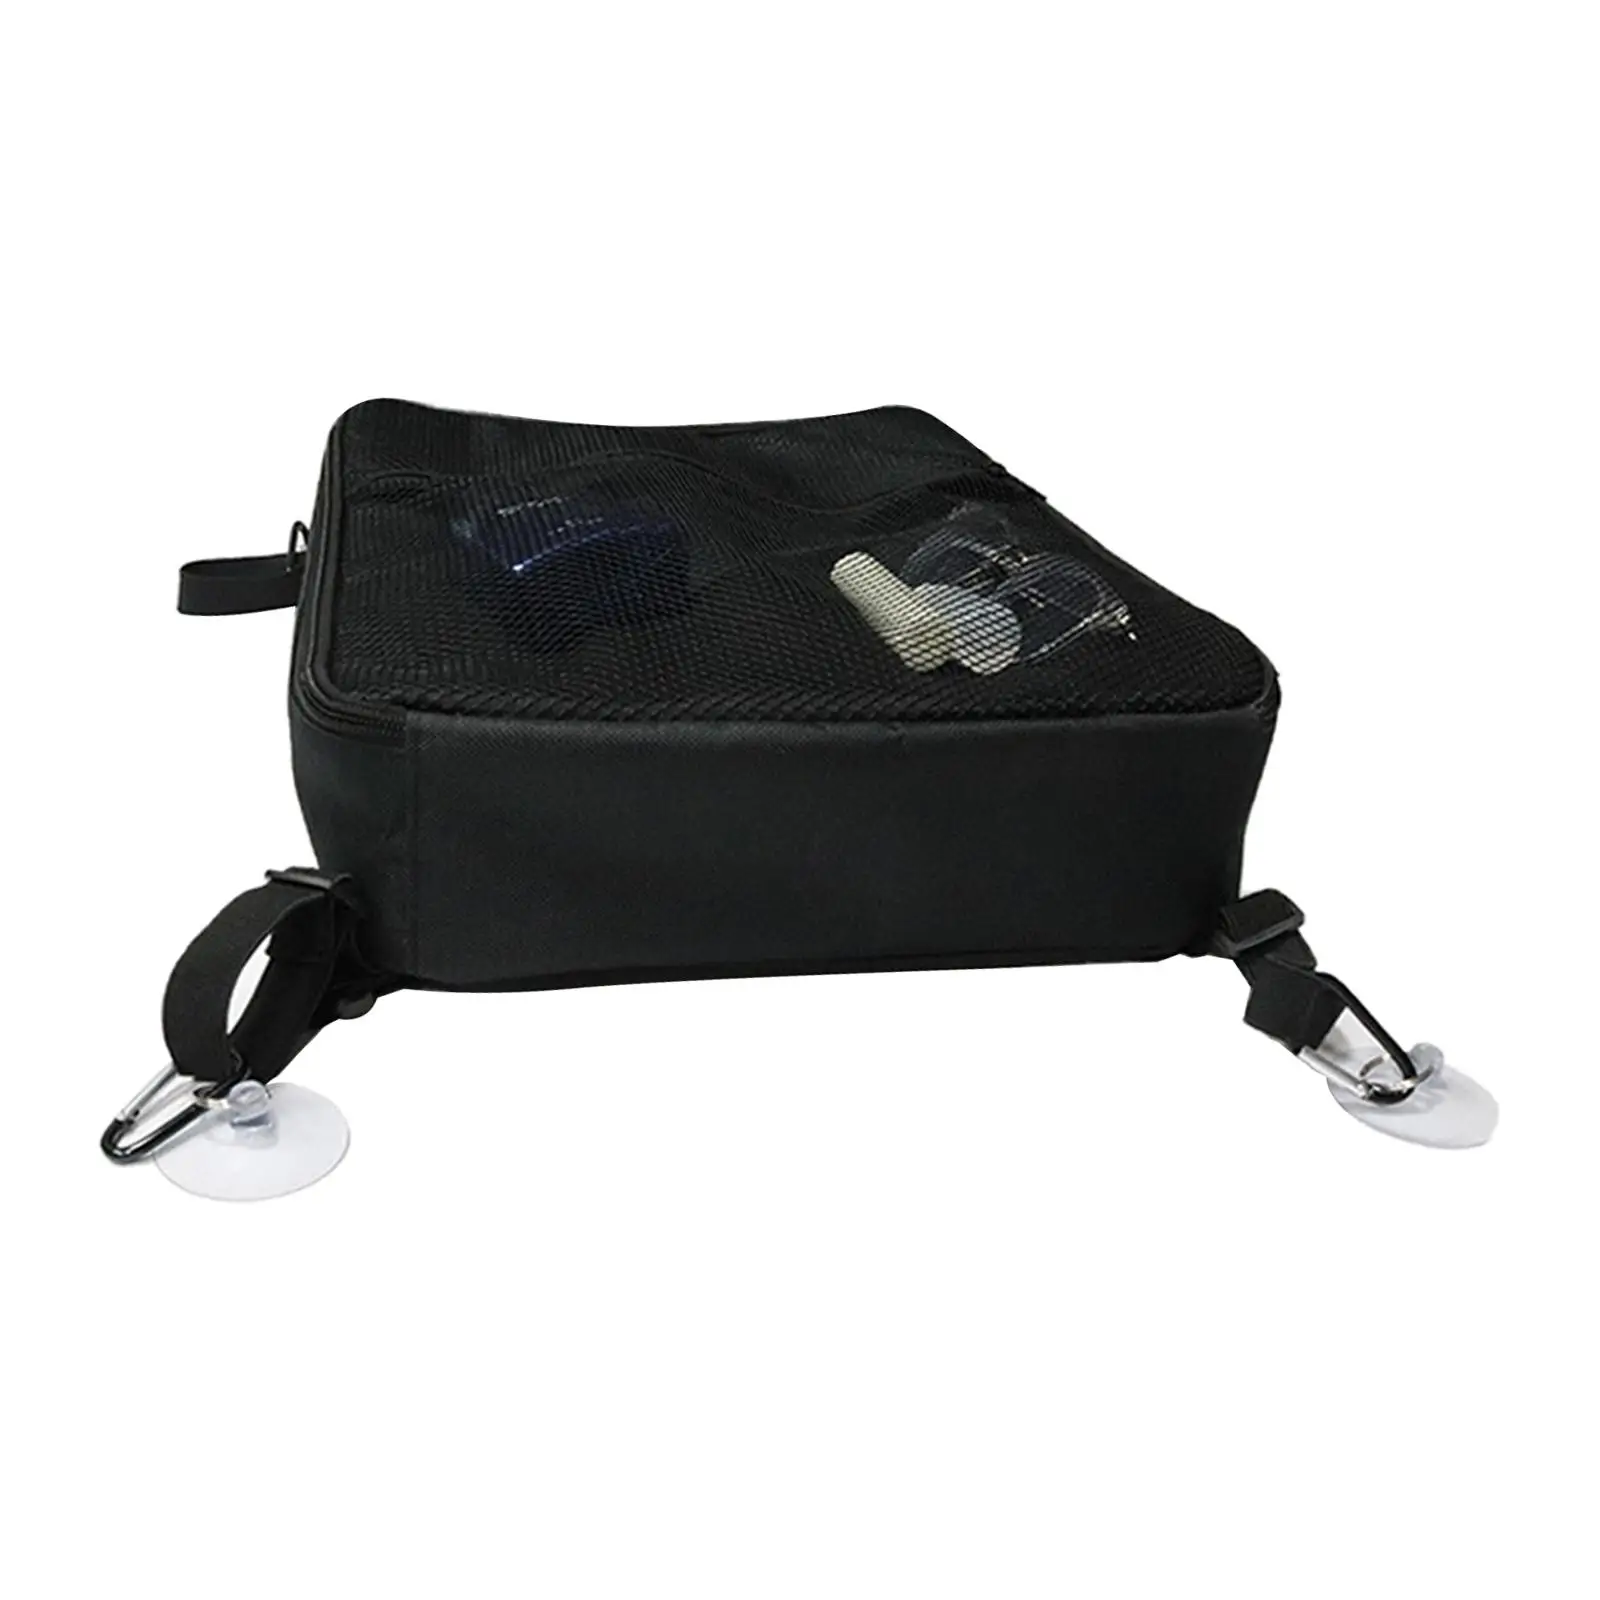 Black Surf Deck Cooler Bag Mesh Top Pocket, 38x30x5cm/15x11.8x2inch Deck Accessories Oxford Cloth Insulated Waterproof Black